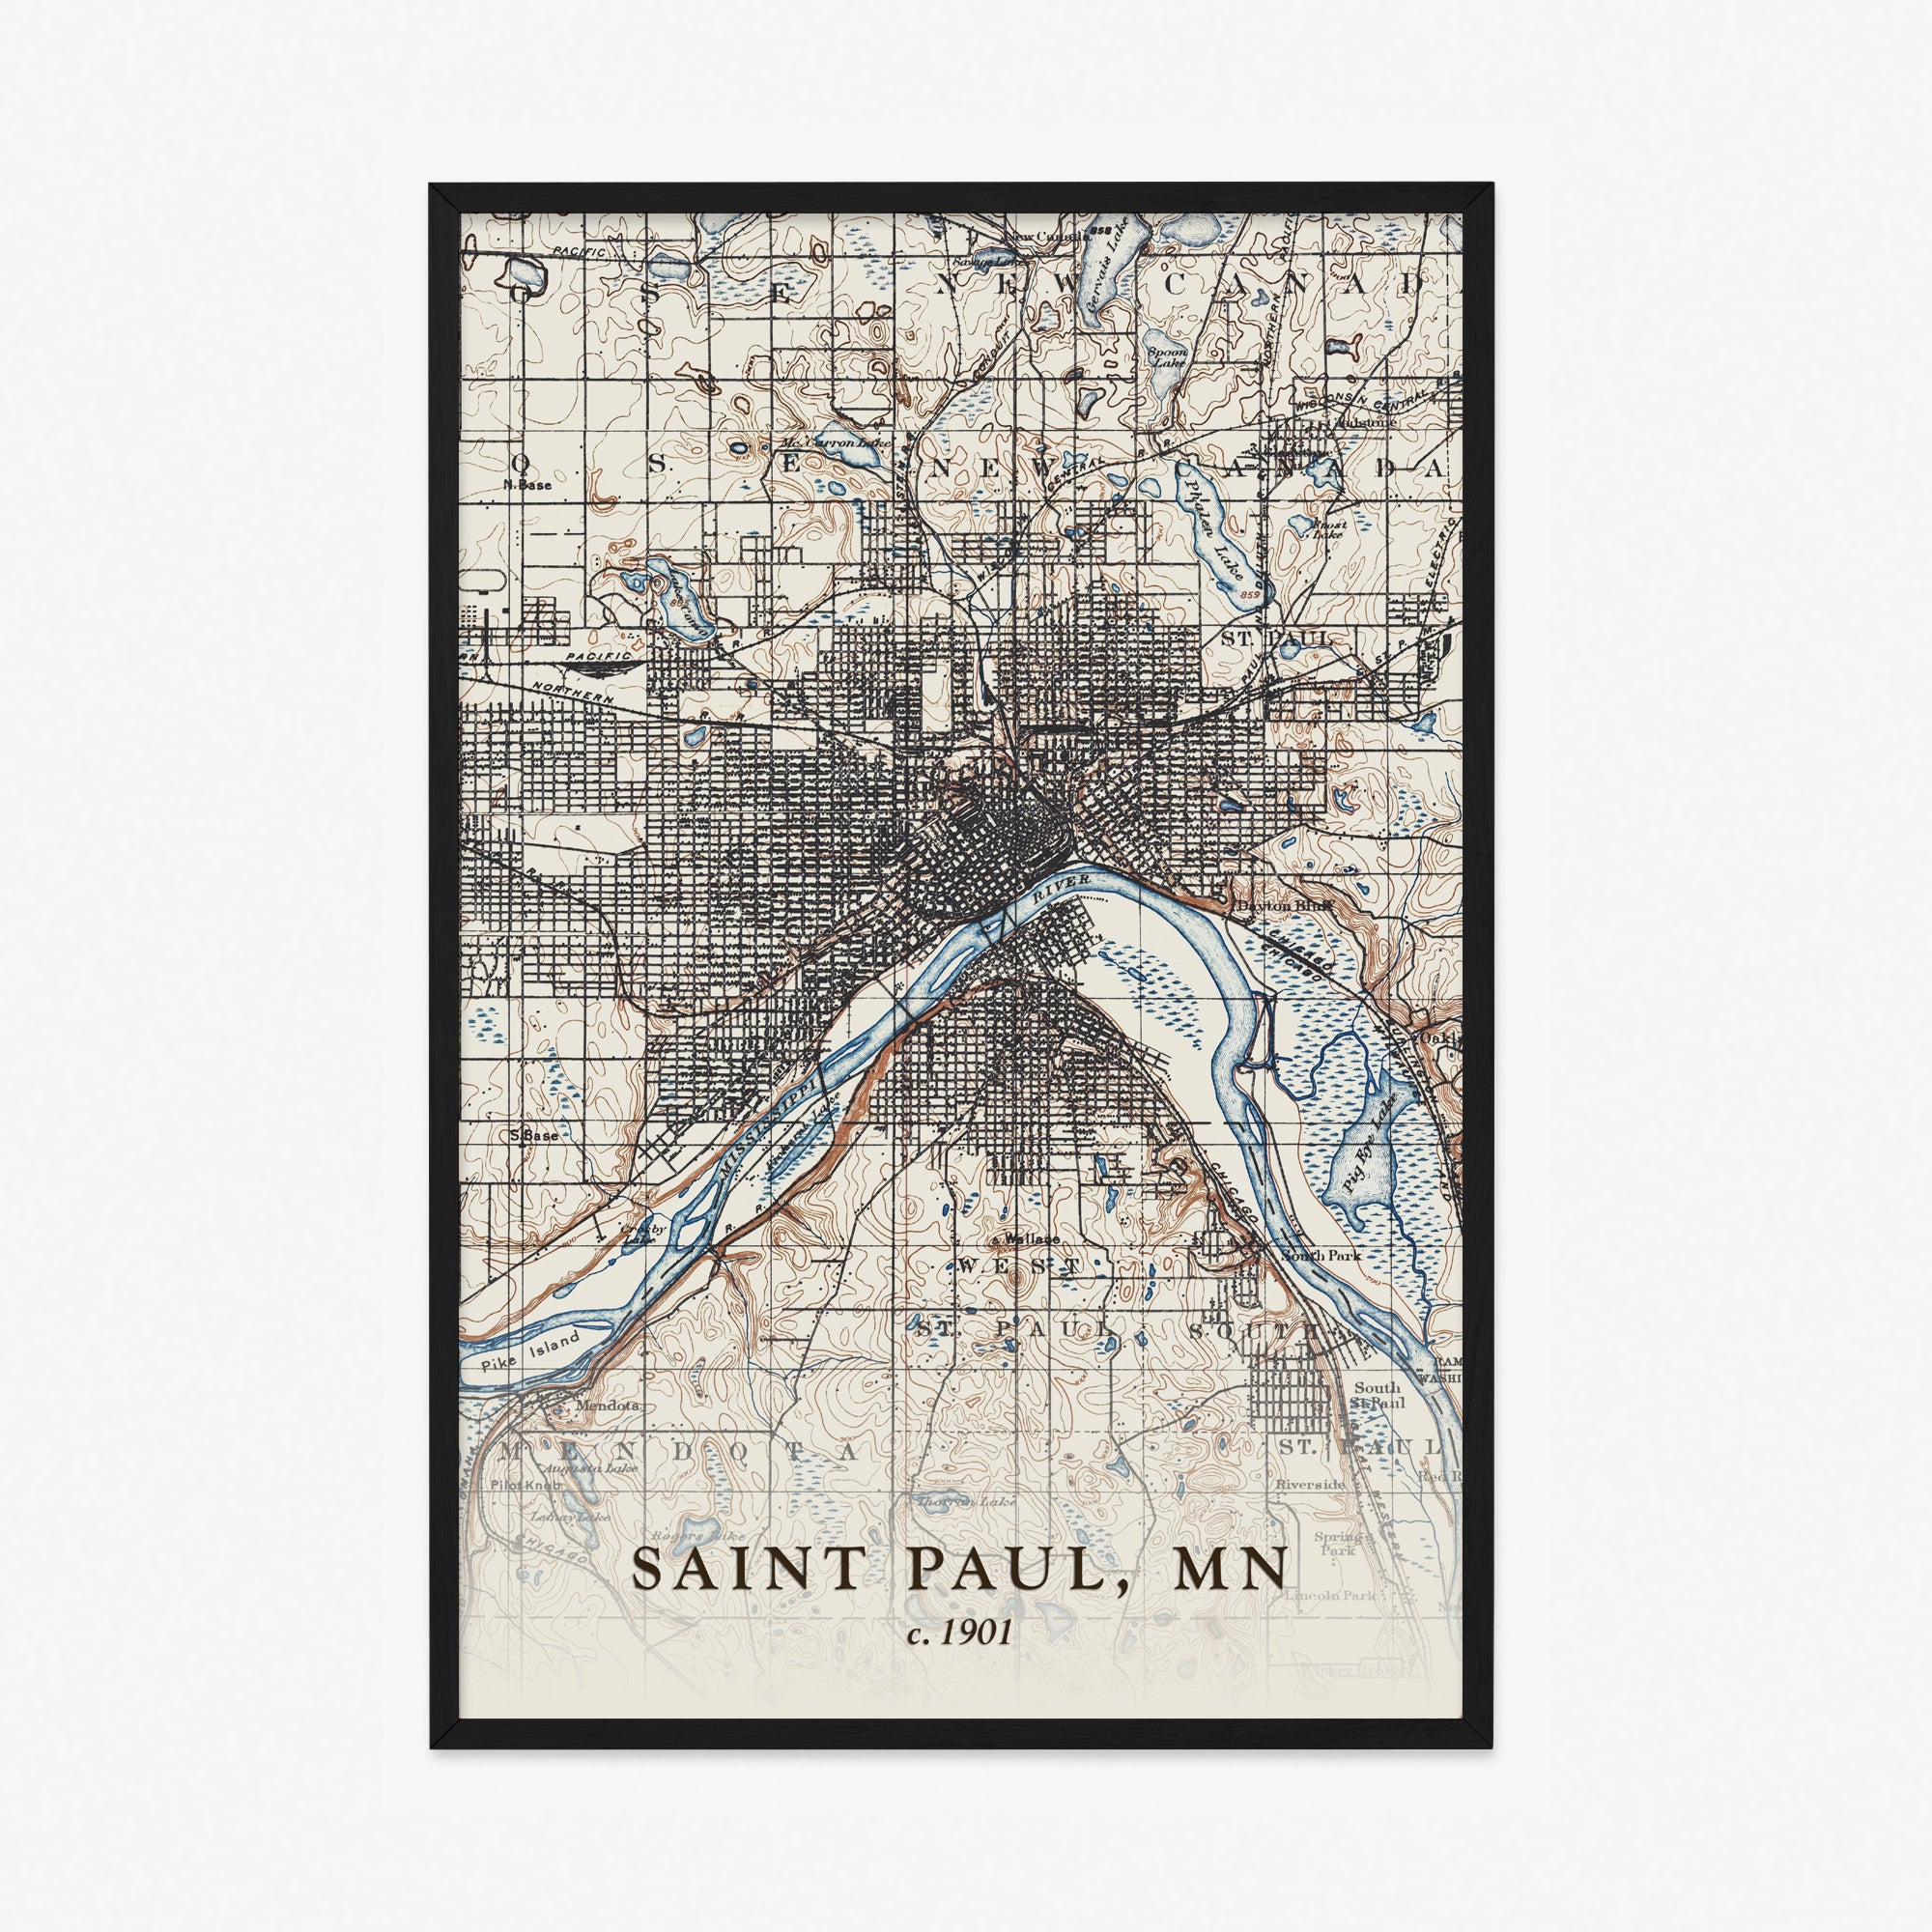 Saint Paul, MN - 1901 Topographic Map